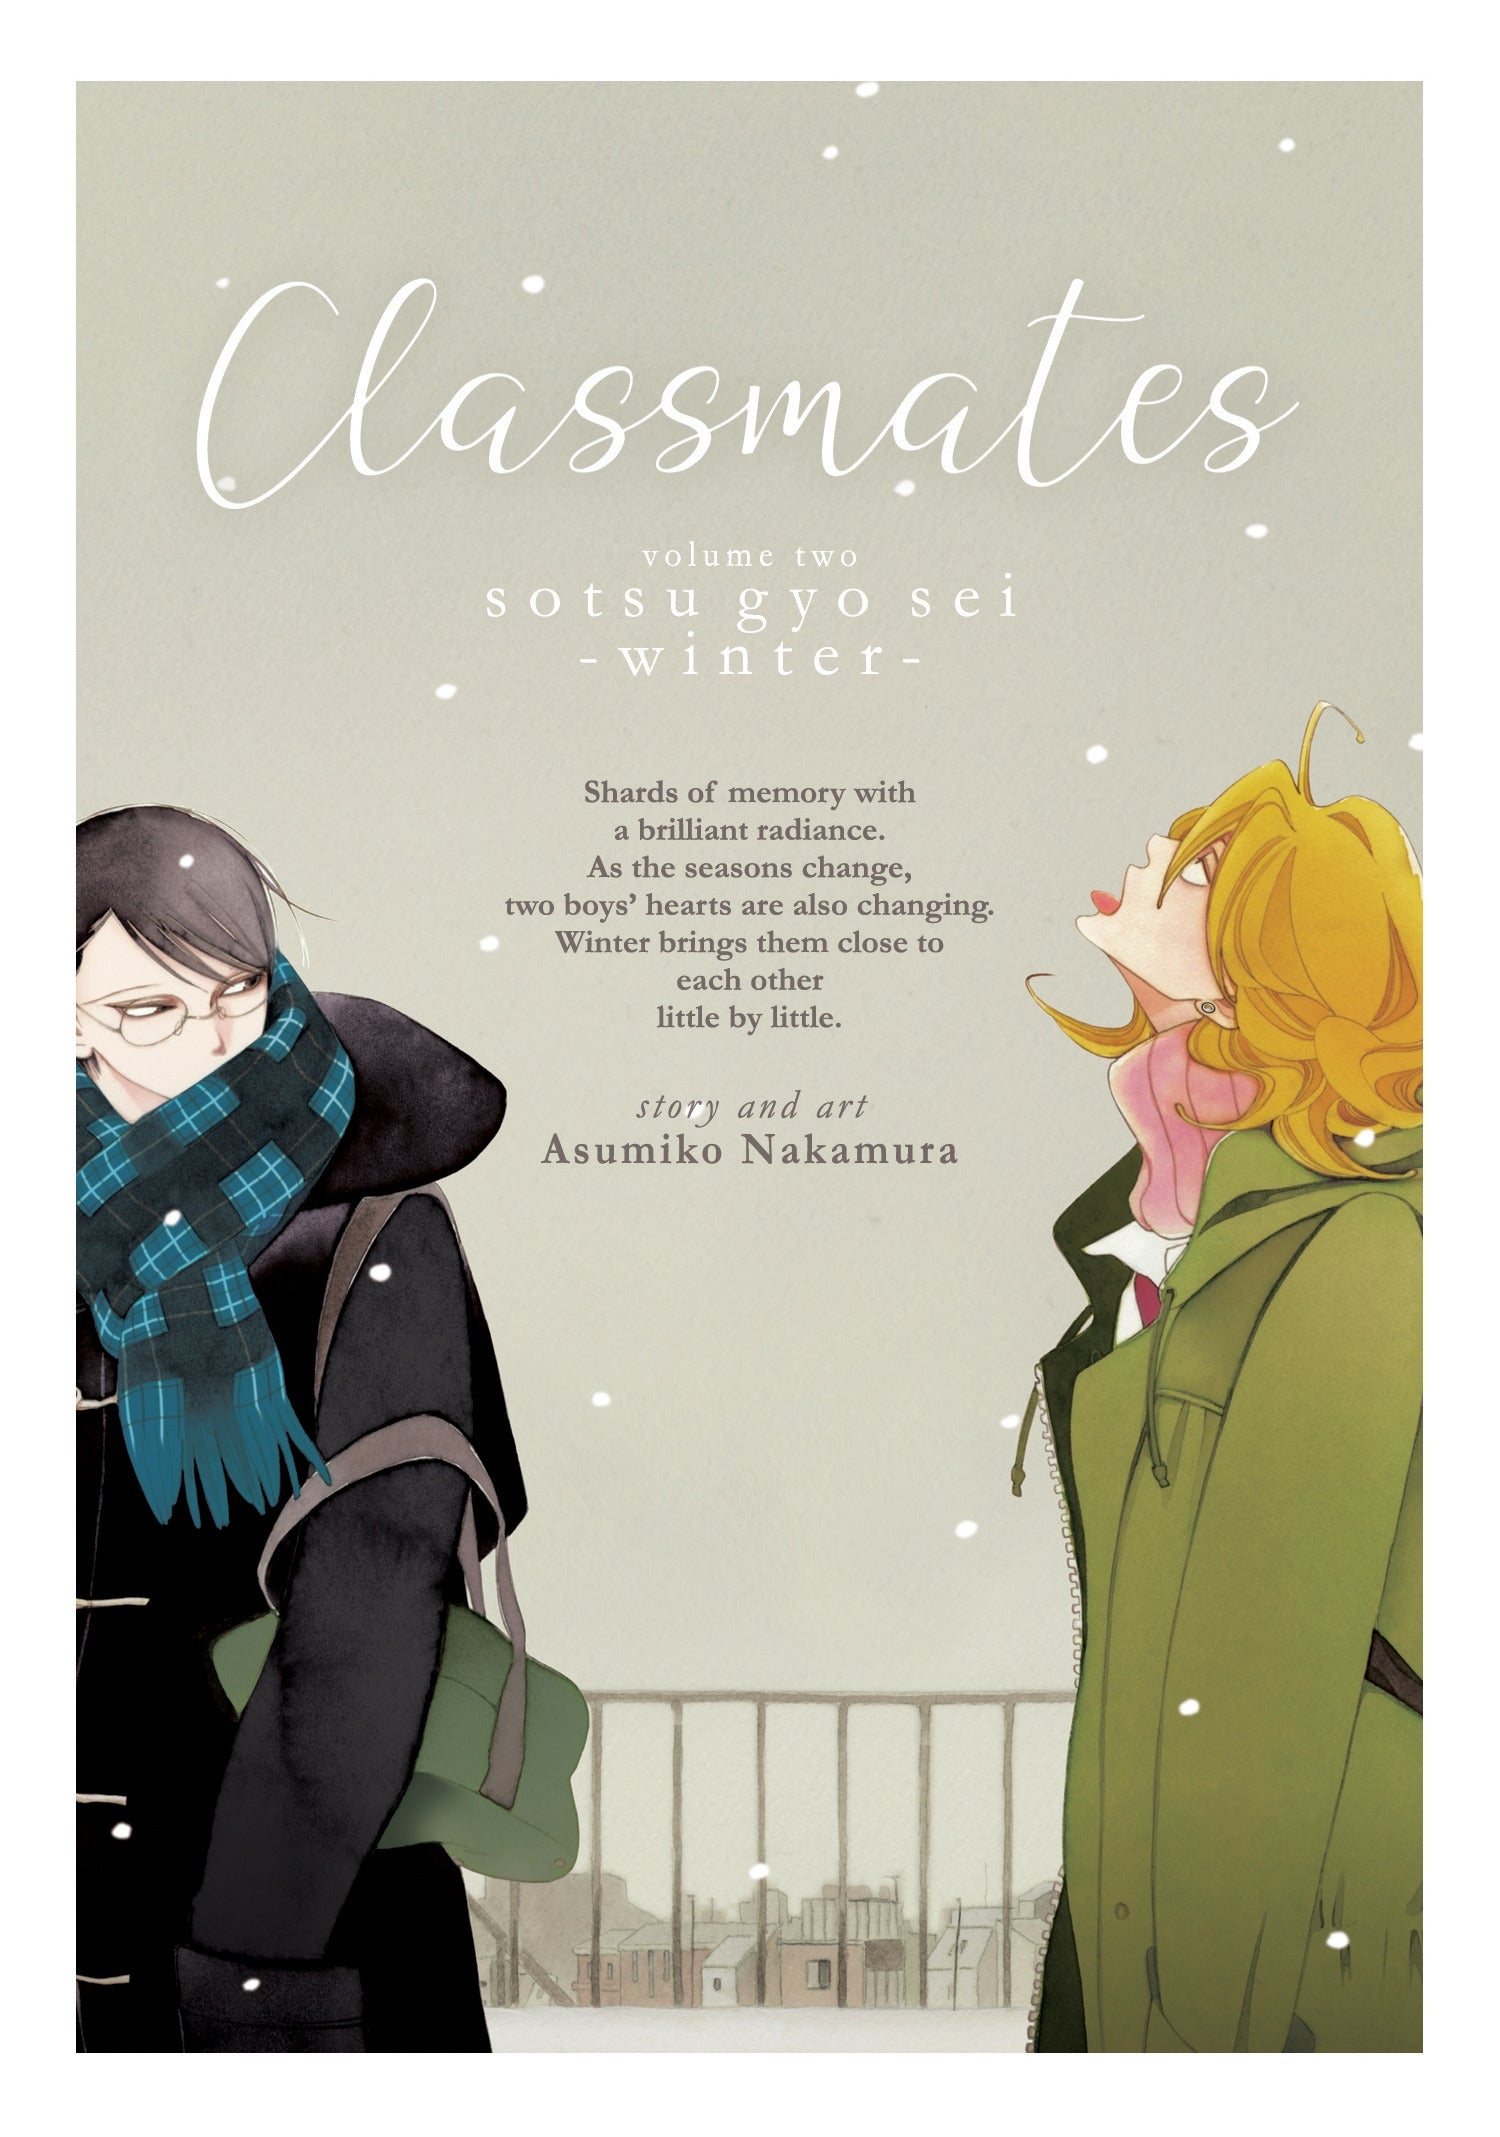 Classmates Vol. 2 Sotsu gyo sei (Winter) - Manga Warehouse